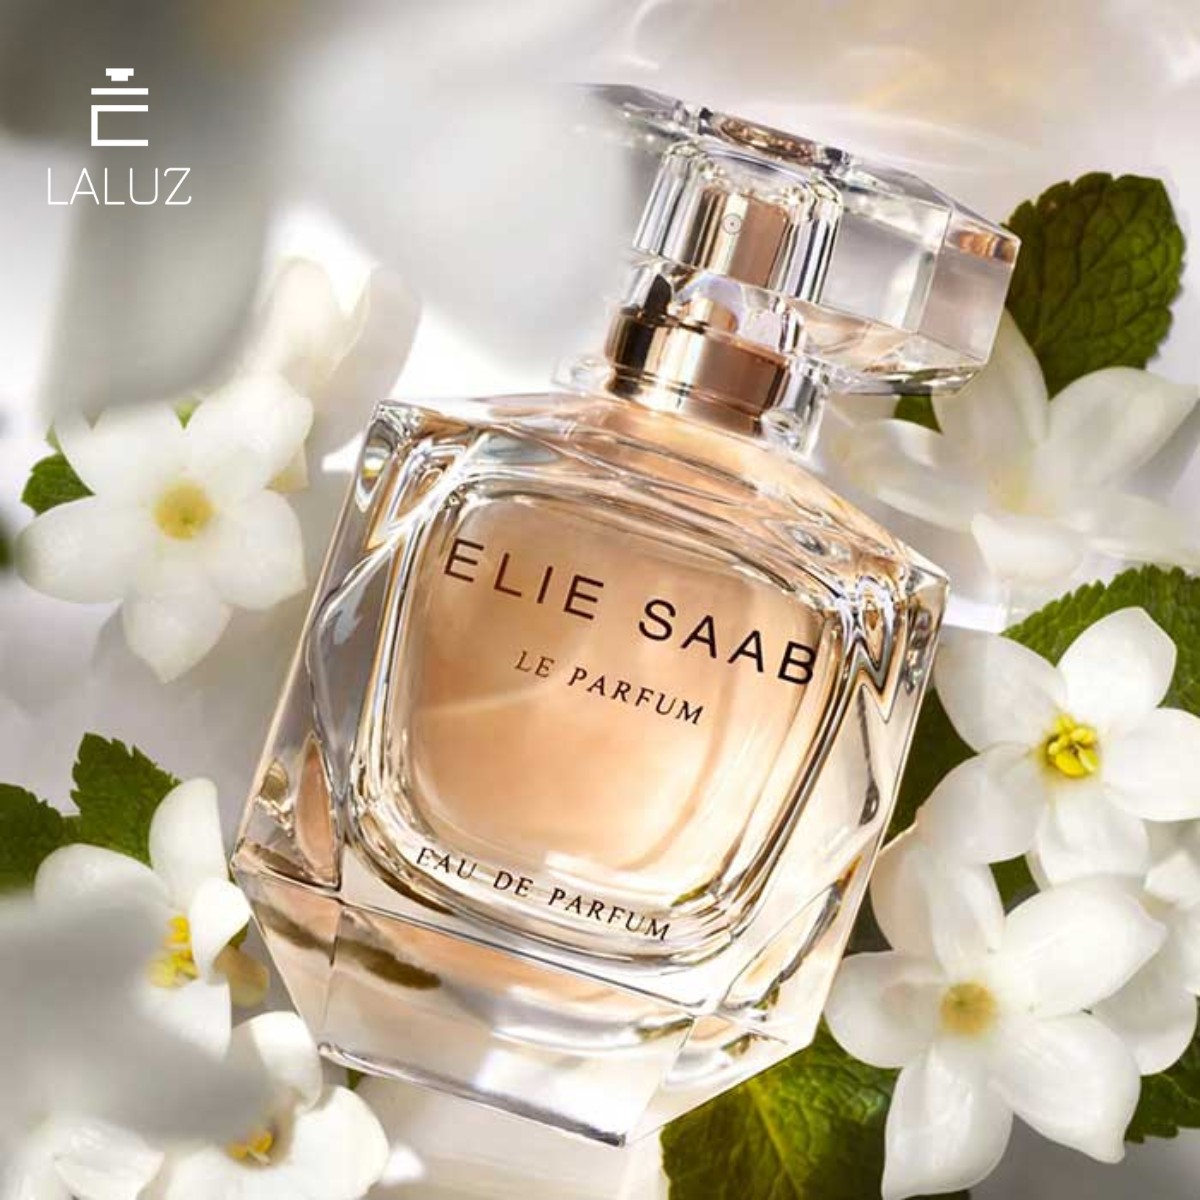 Đánh giá nước hoa Elie Saab Le Parfum mùi hương đầy nữ tính